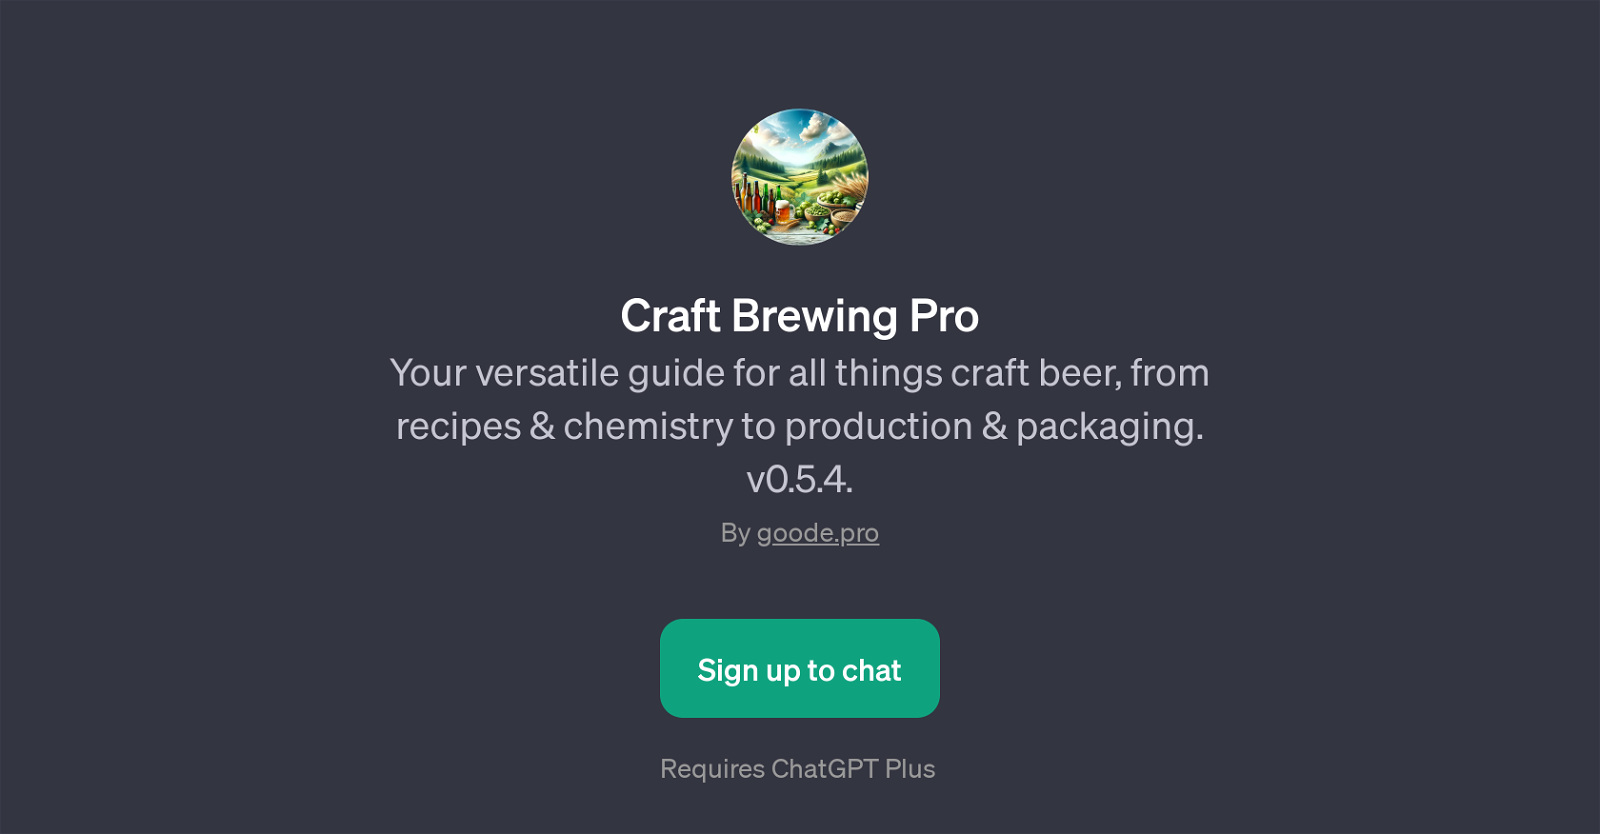 Craft Brewing Pro website